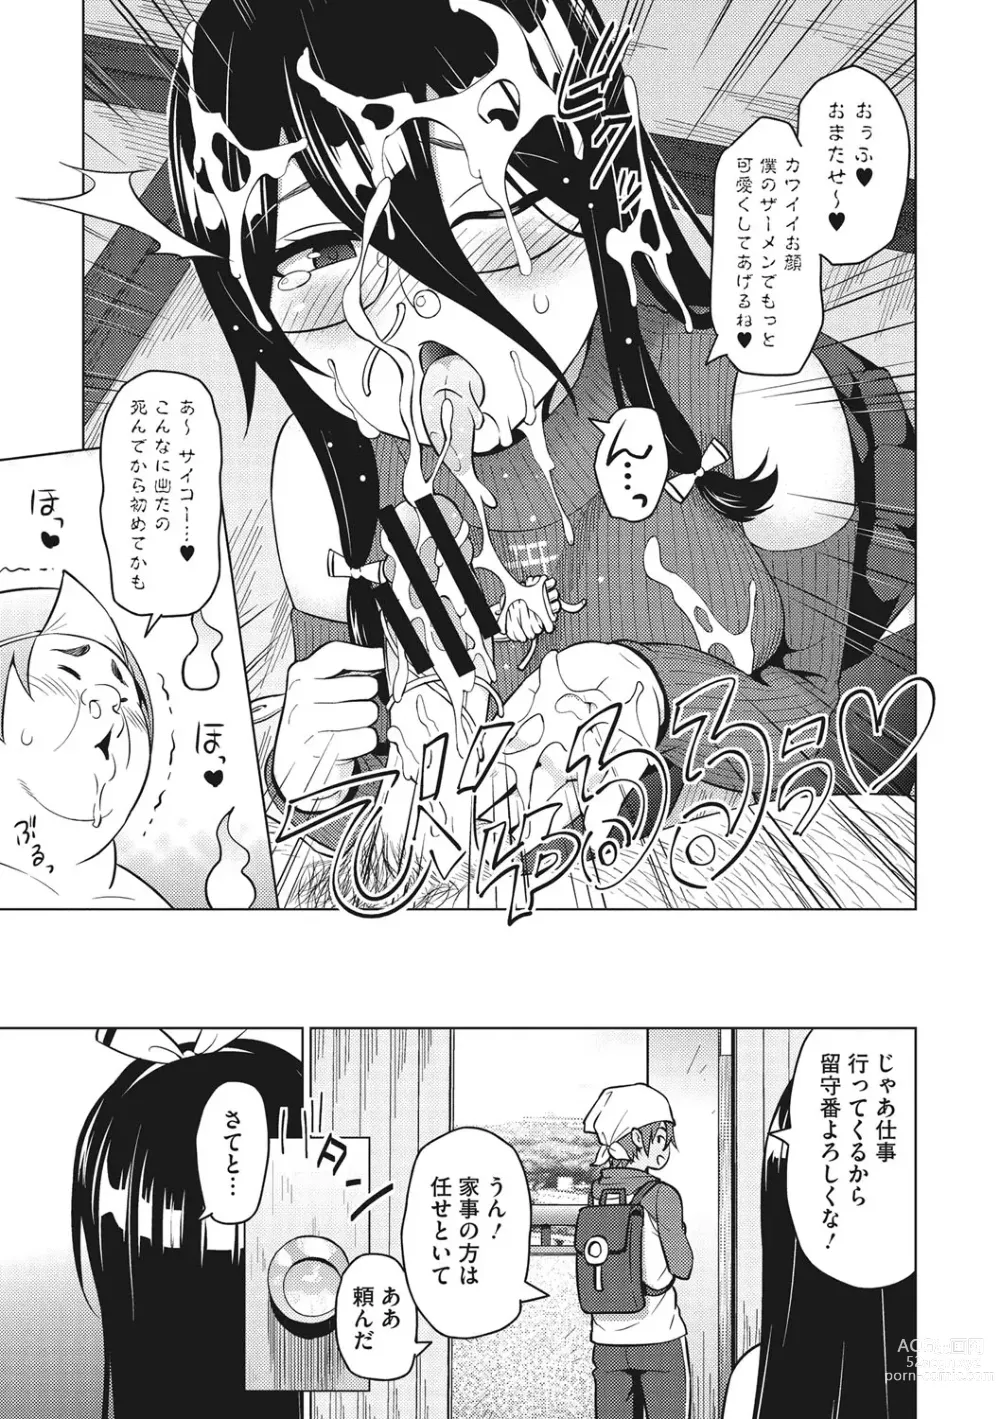 Page 10 of manga Risky Play